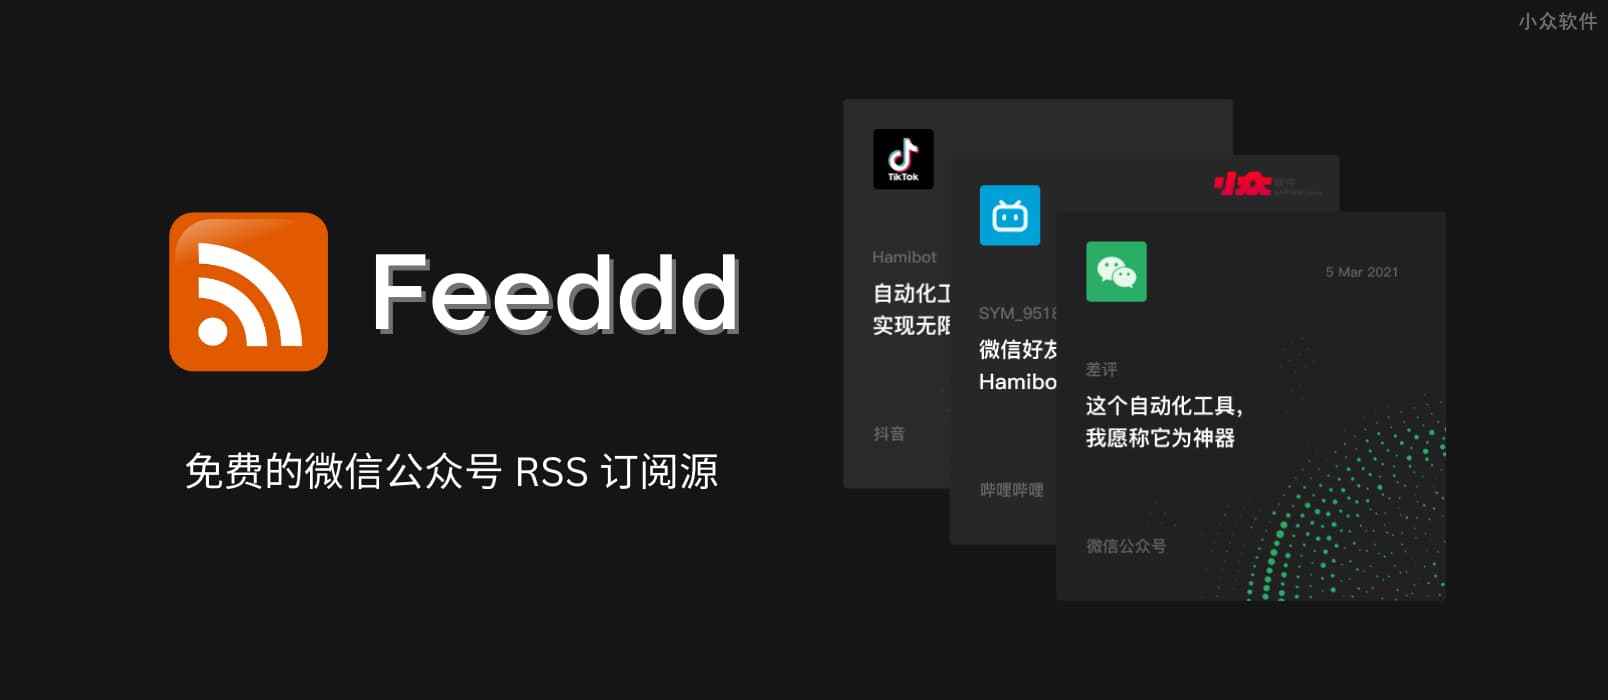 Feeddd – 分布式，免费的微信公众号 RSS 订阅源，已超过 30000+ 微信公众号